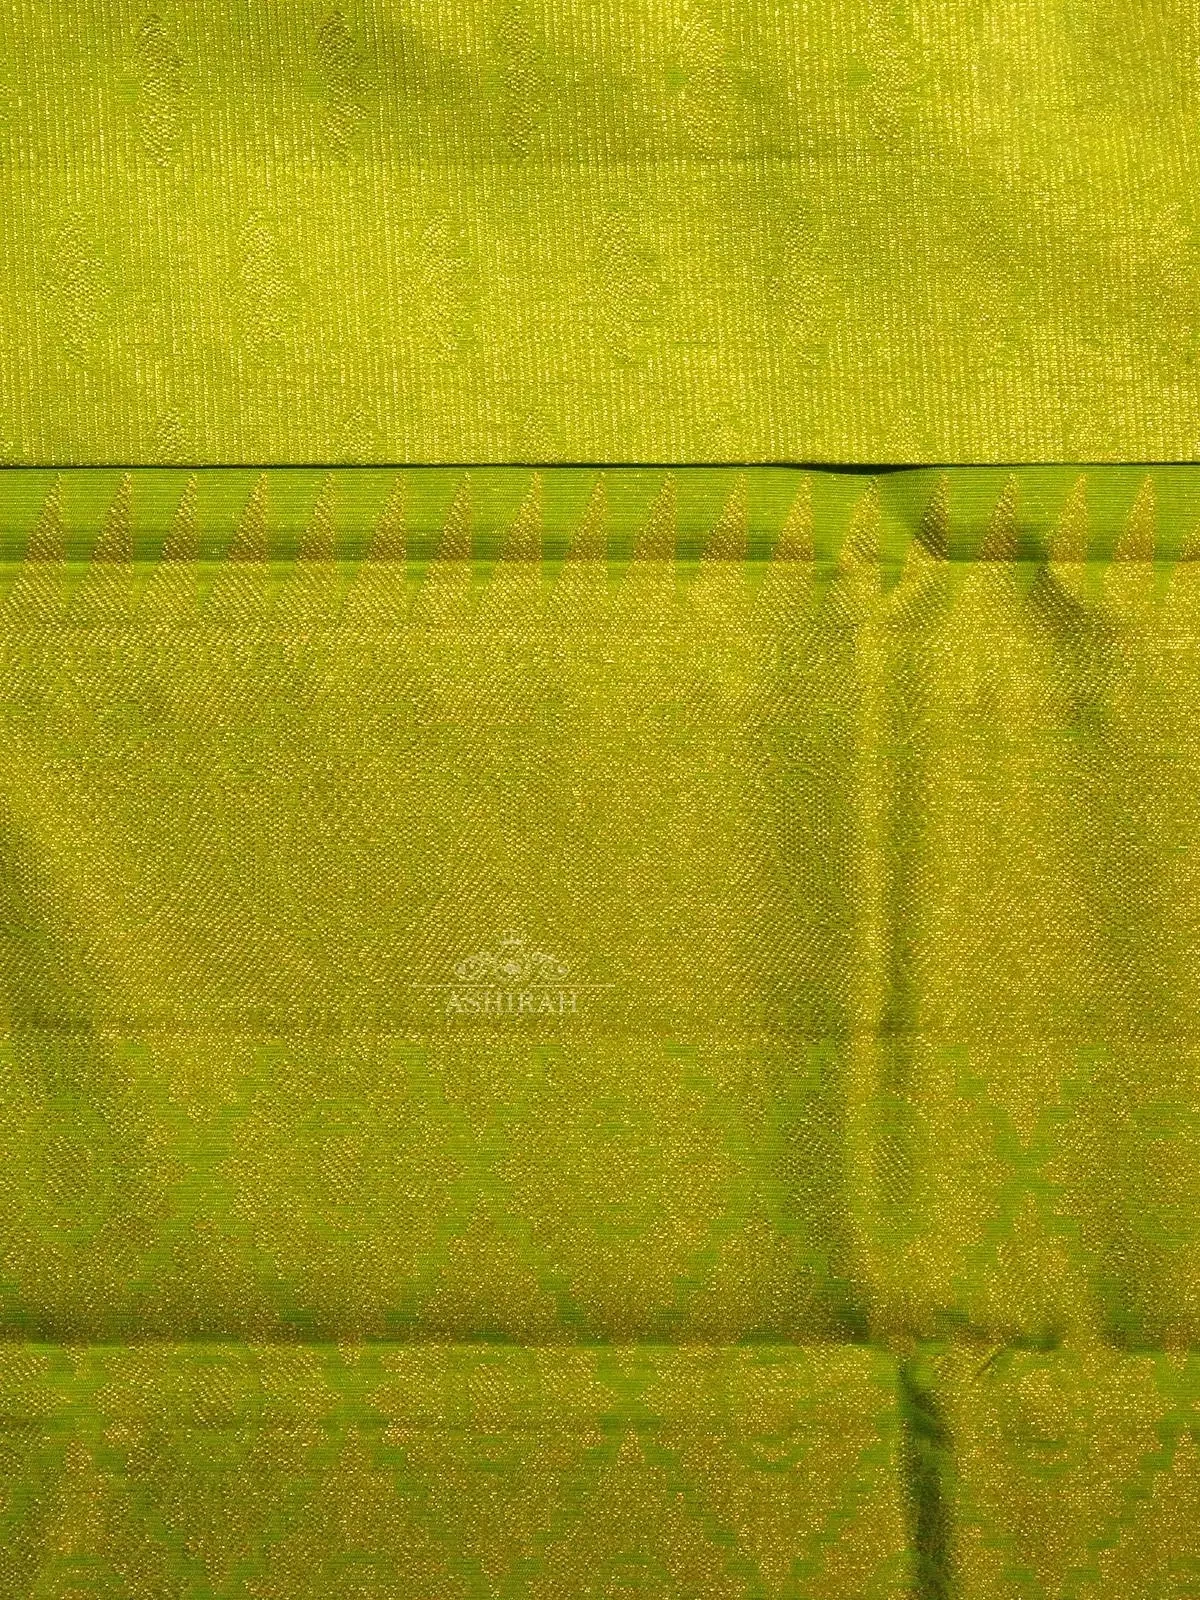 Parrot Green Pure Kanchipuram (bridal) Silk Saree With Design Motifs On The Body And Zari Border